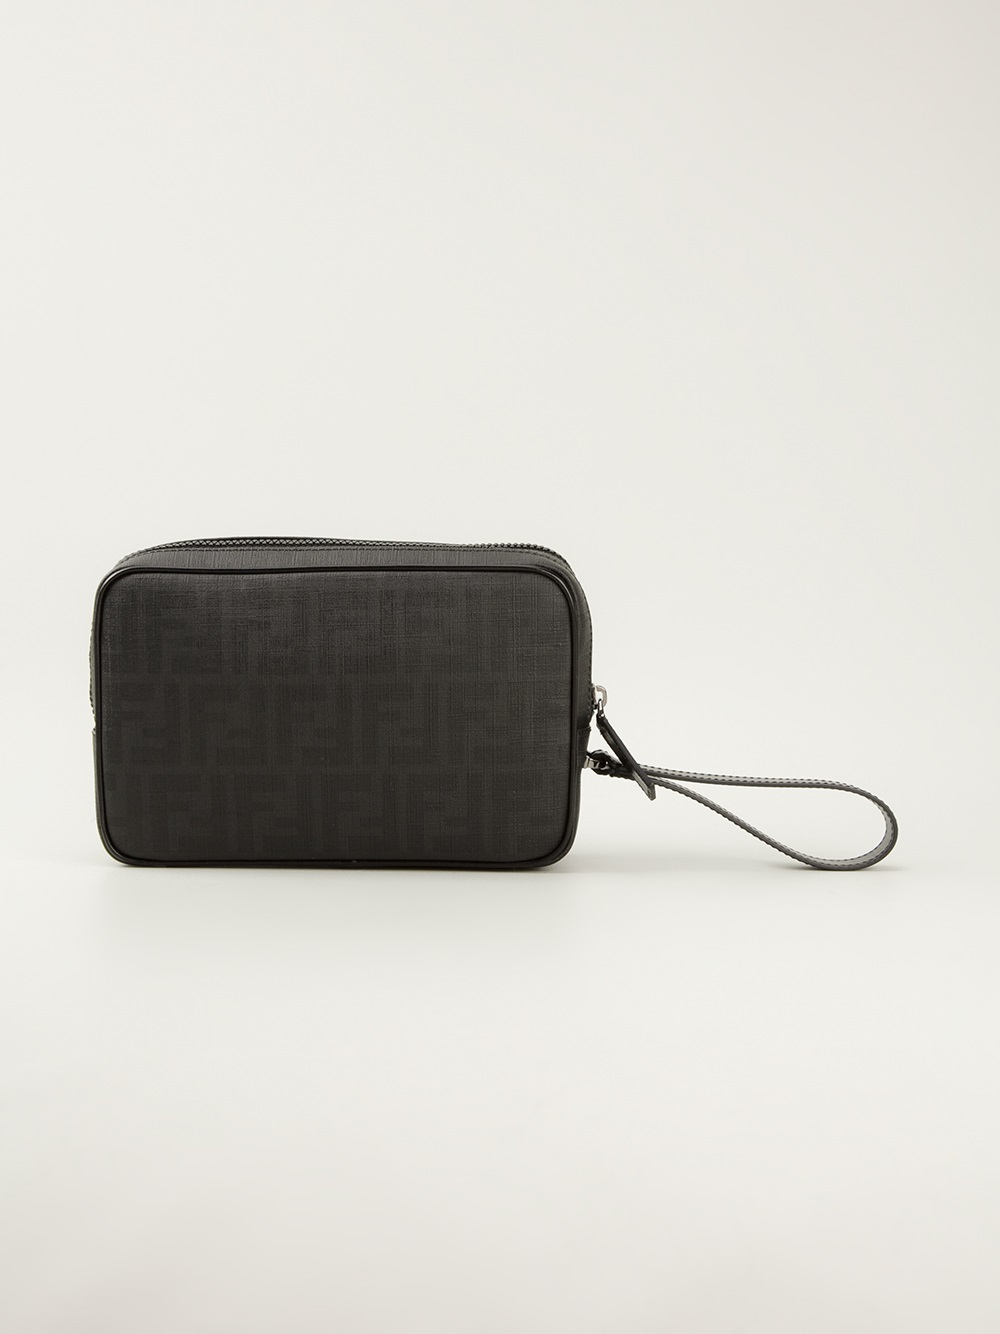 Fendi Functional Clutch Bag in Black for Men | Lyst